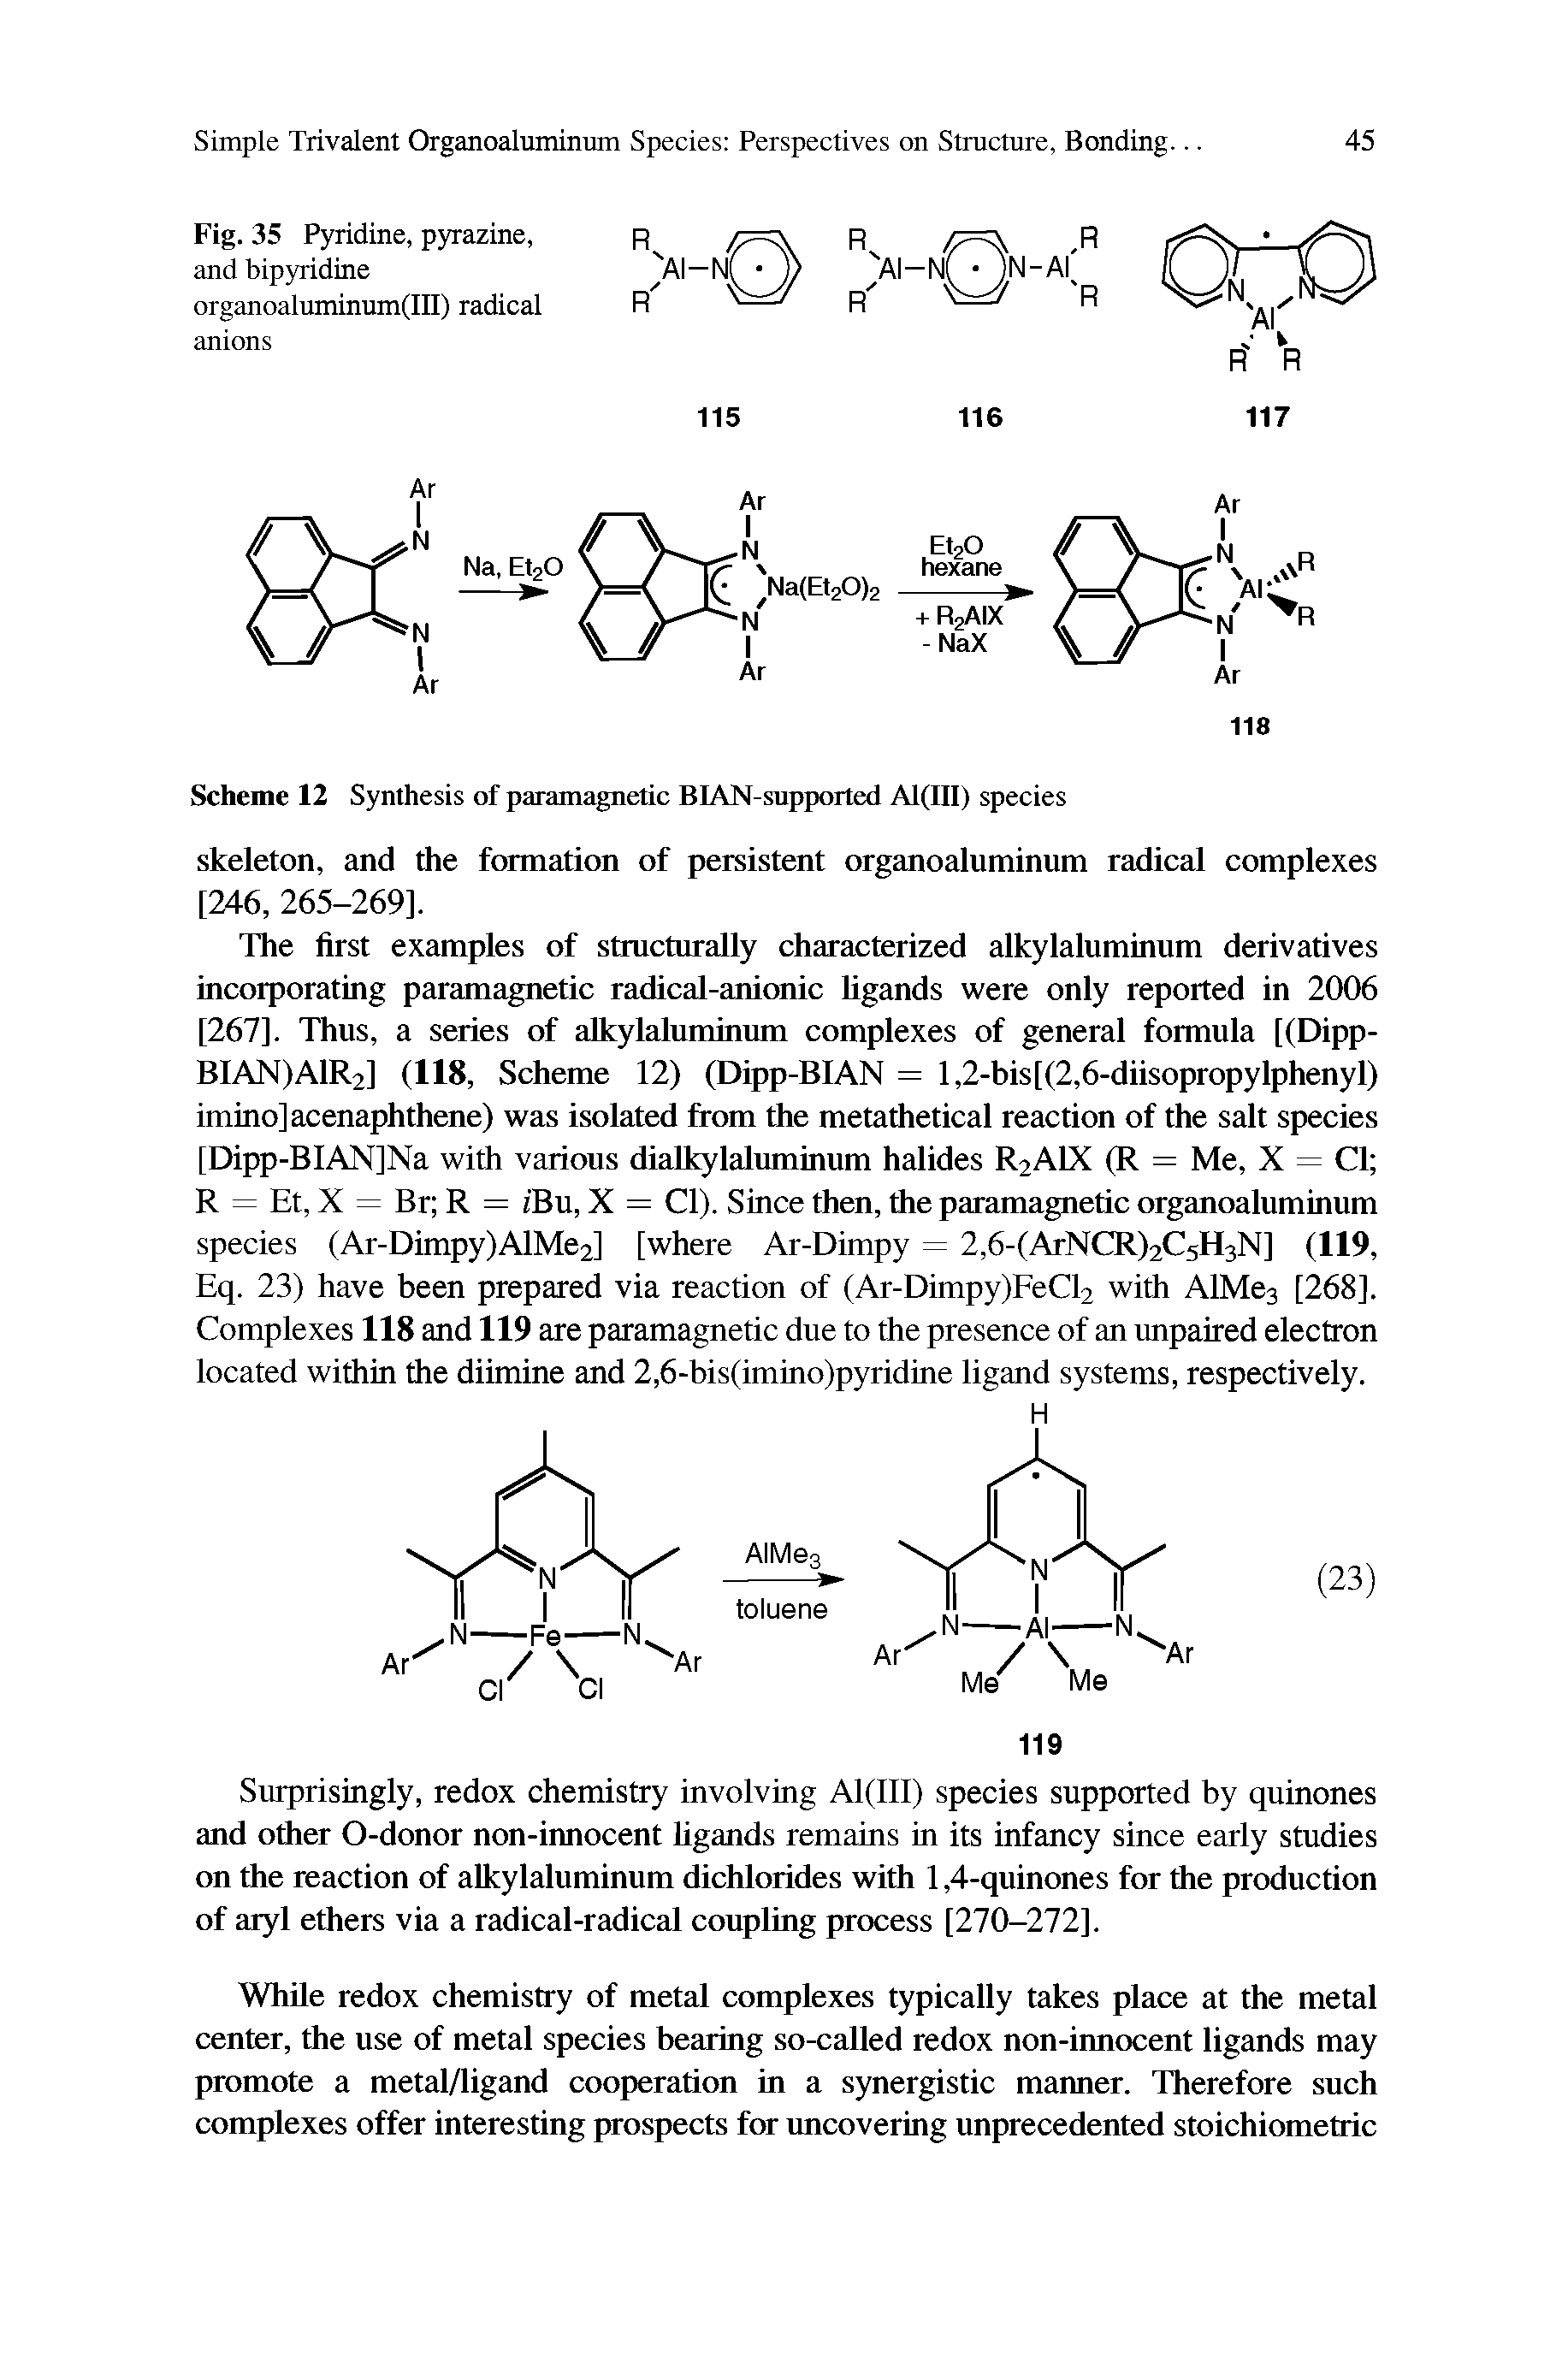 Fig. 35 Pyridine, pyrazine, and bipyridine organoaluimnum(in) radical anions...